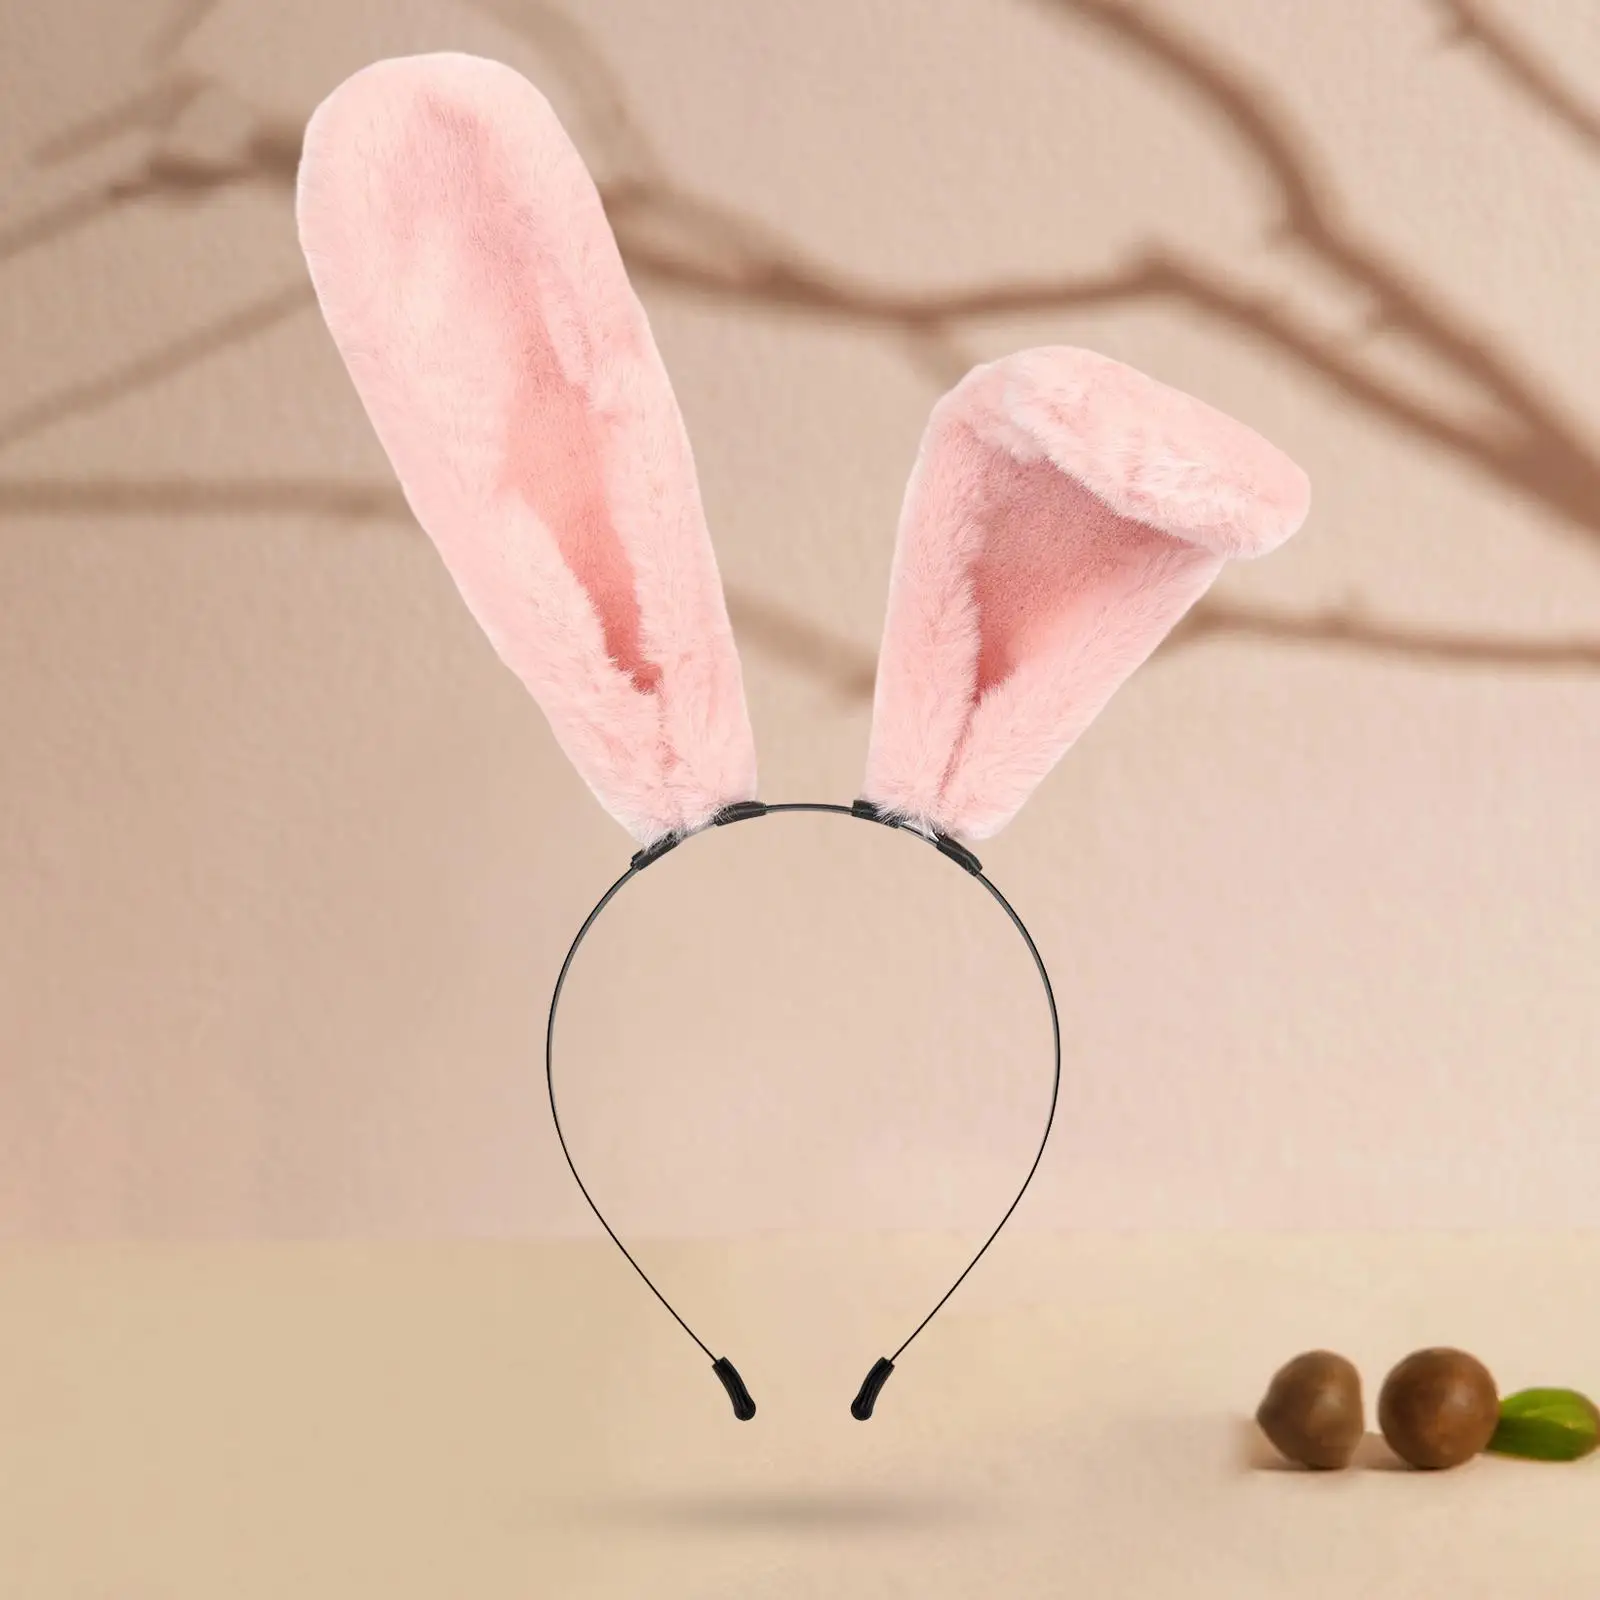 Plush Long Bunny Ears Headband Hair Hoop for Easter Cosplay Halloween Photo Props